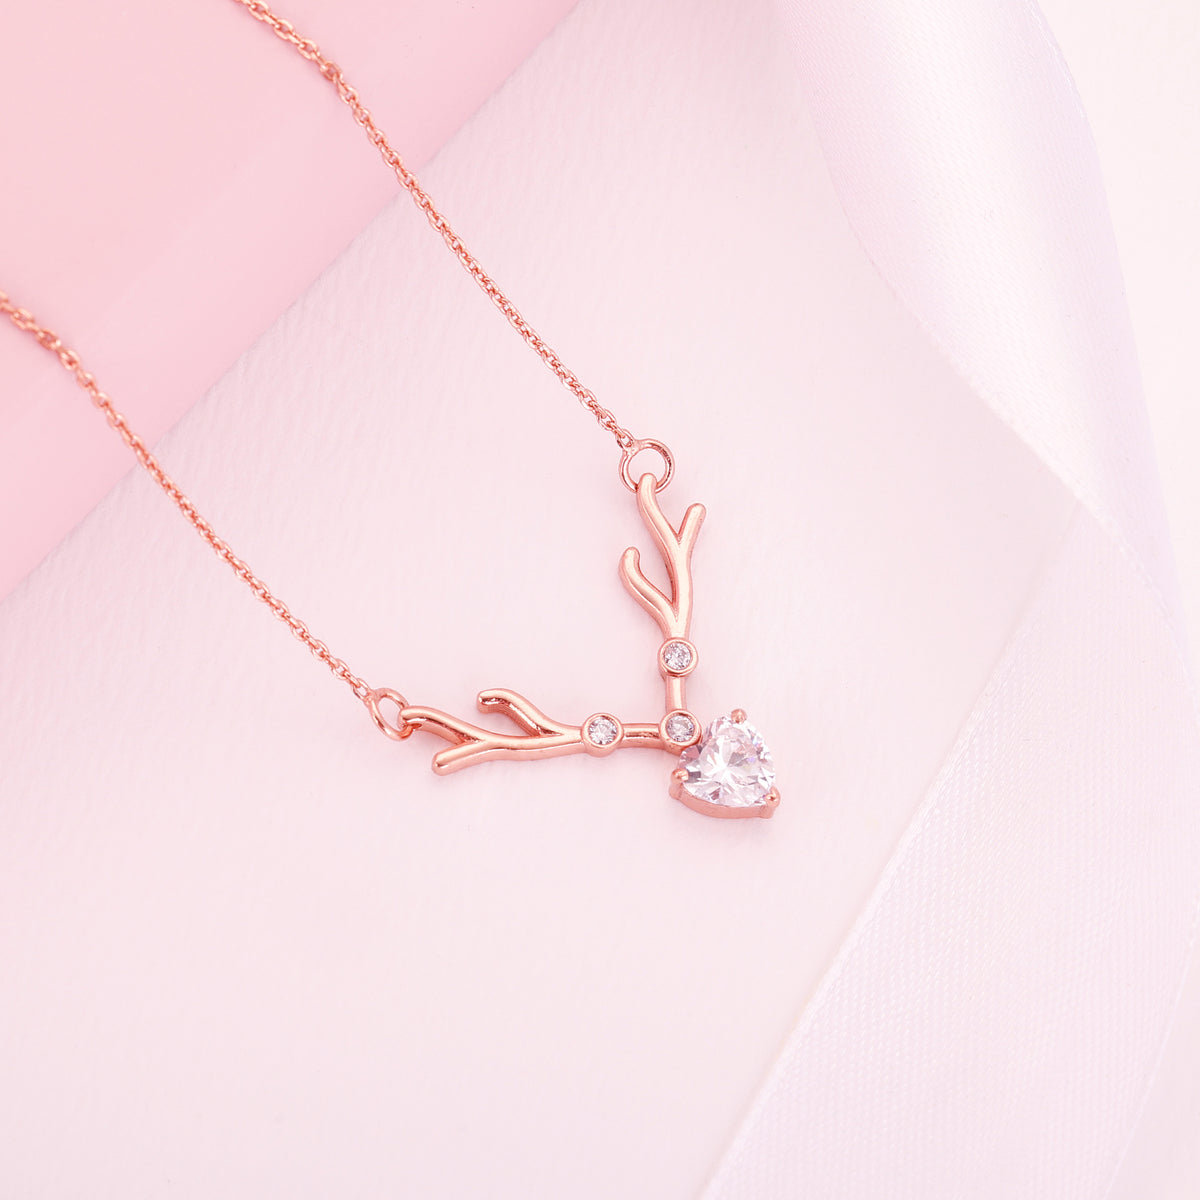 Buy Rose Gold Deer Heart Necklace Online in India